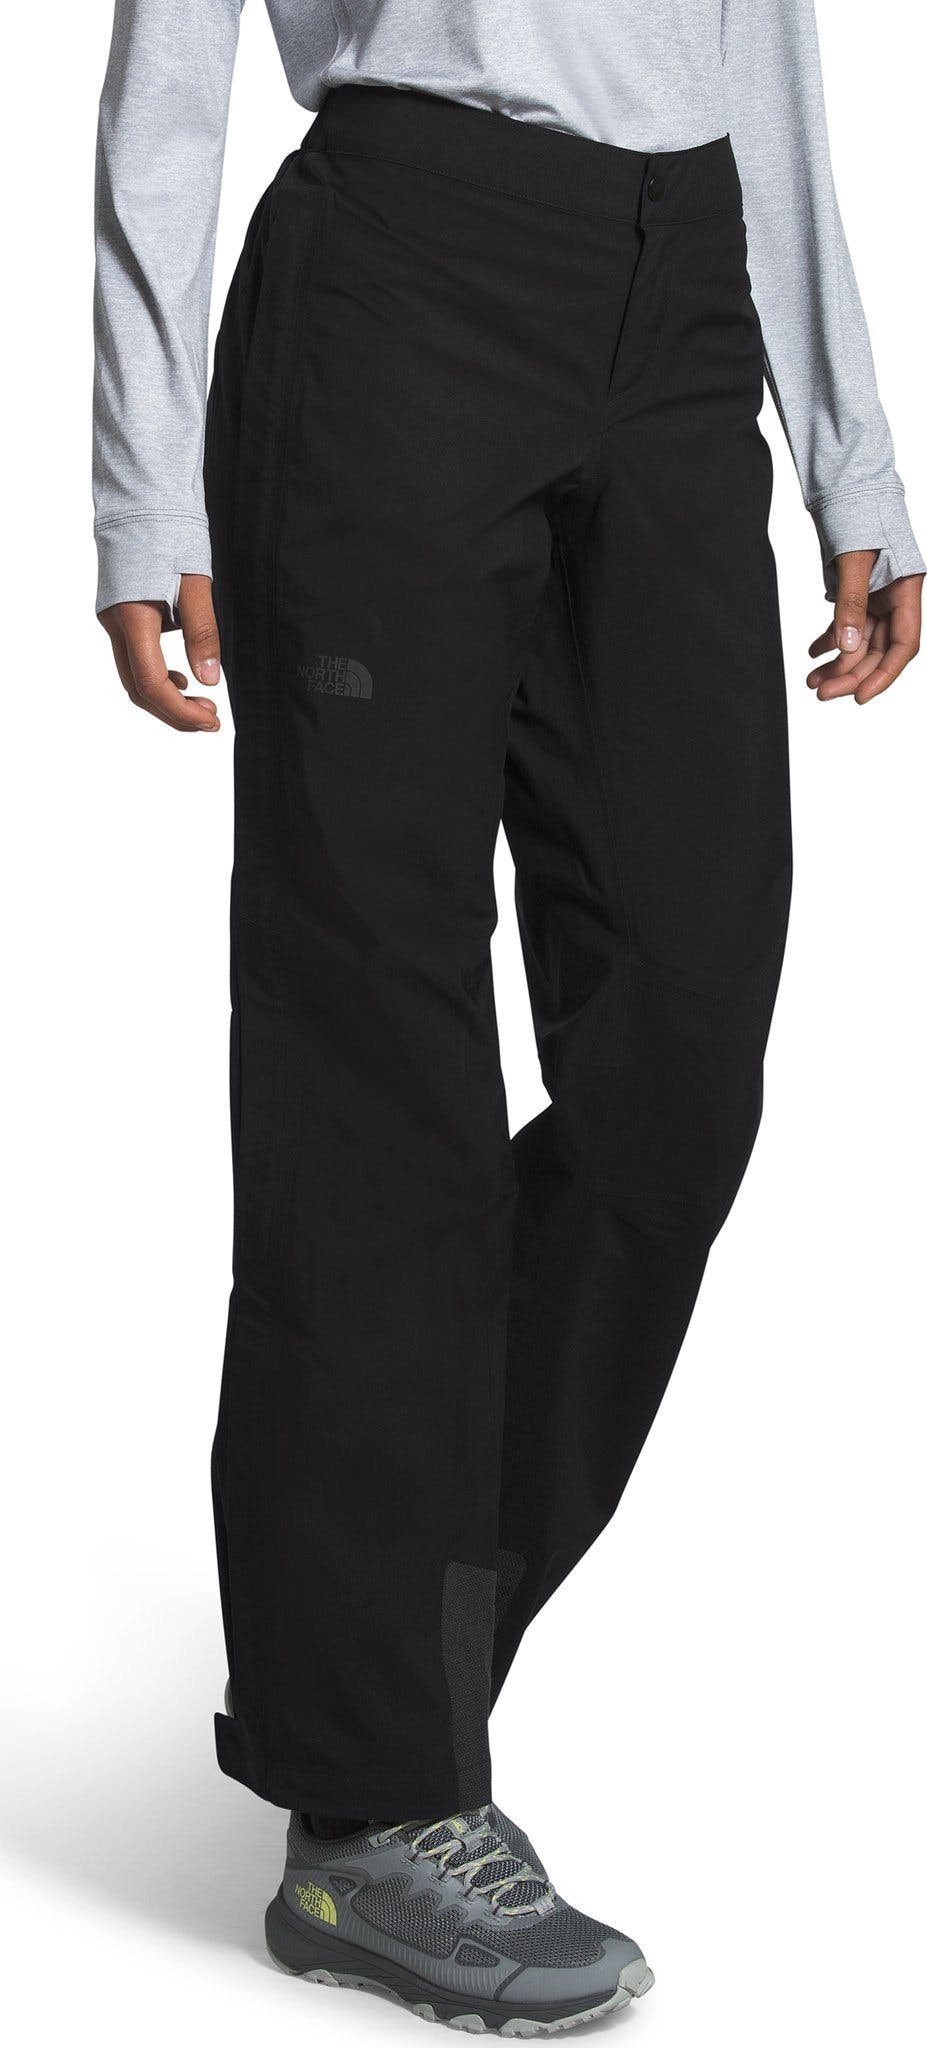 Product image for Dryzzle FUTURELIGHT Full Zip Pants - Women's